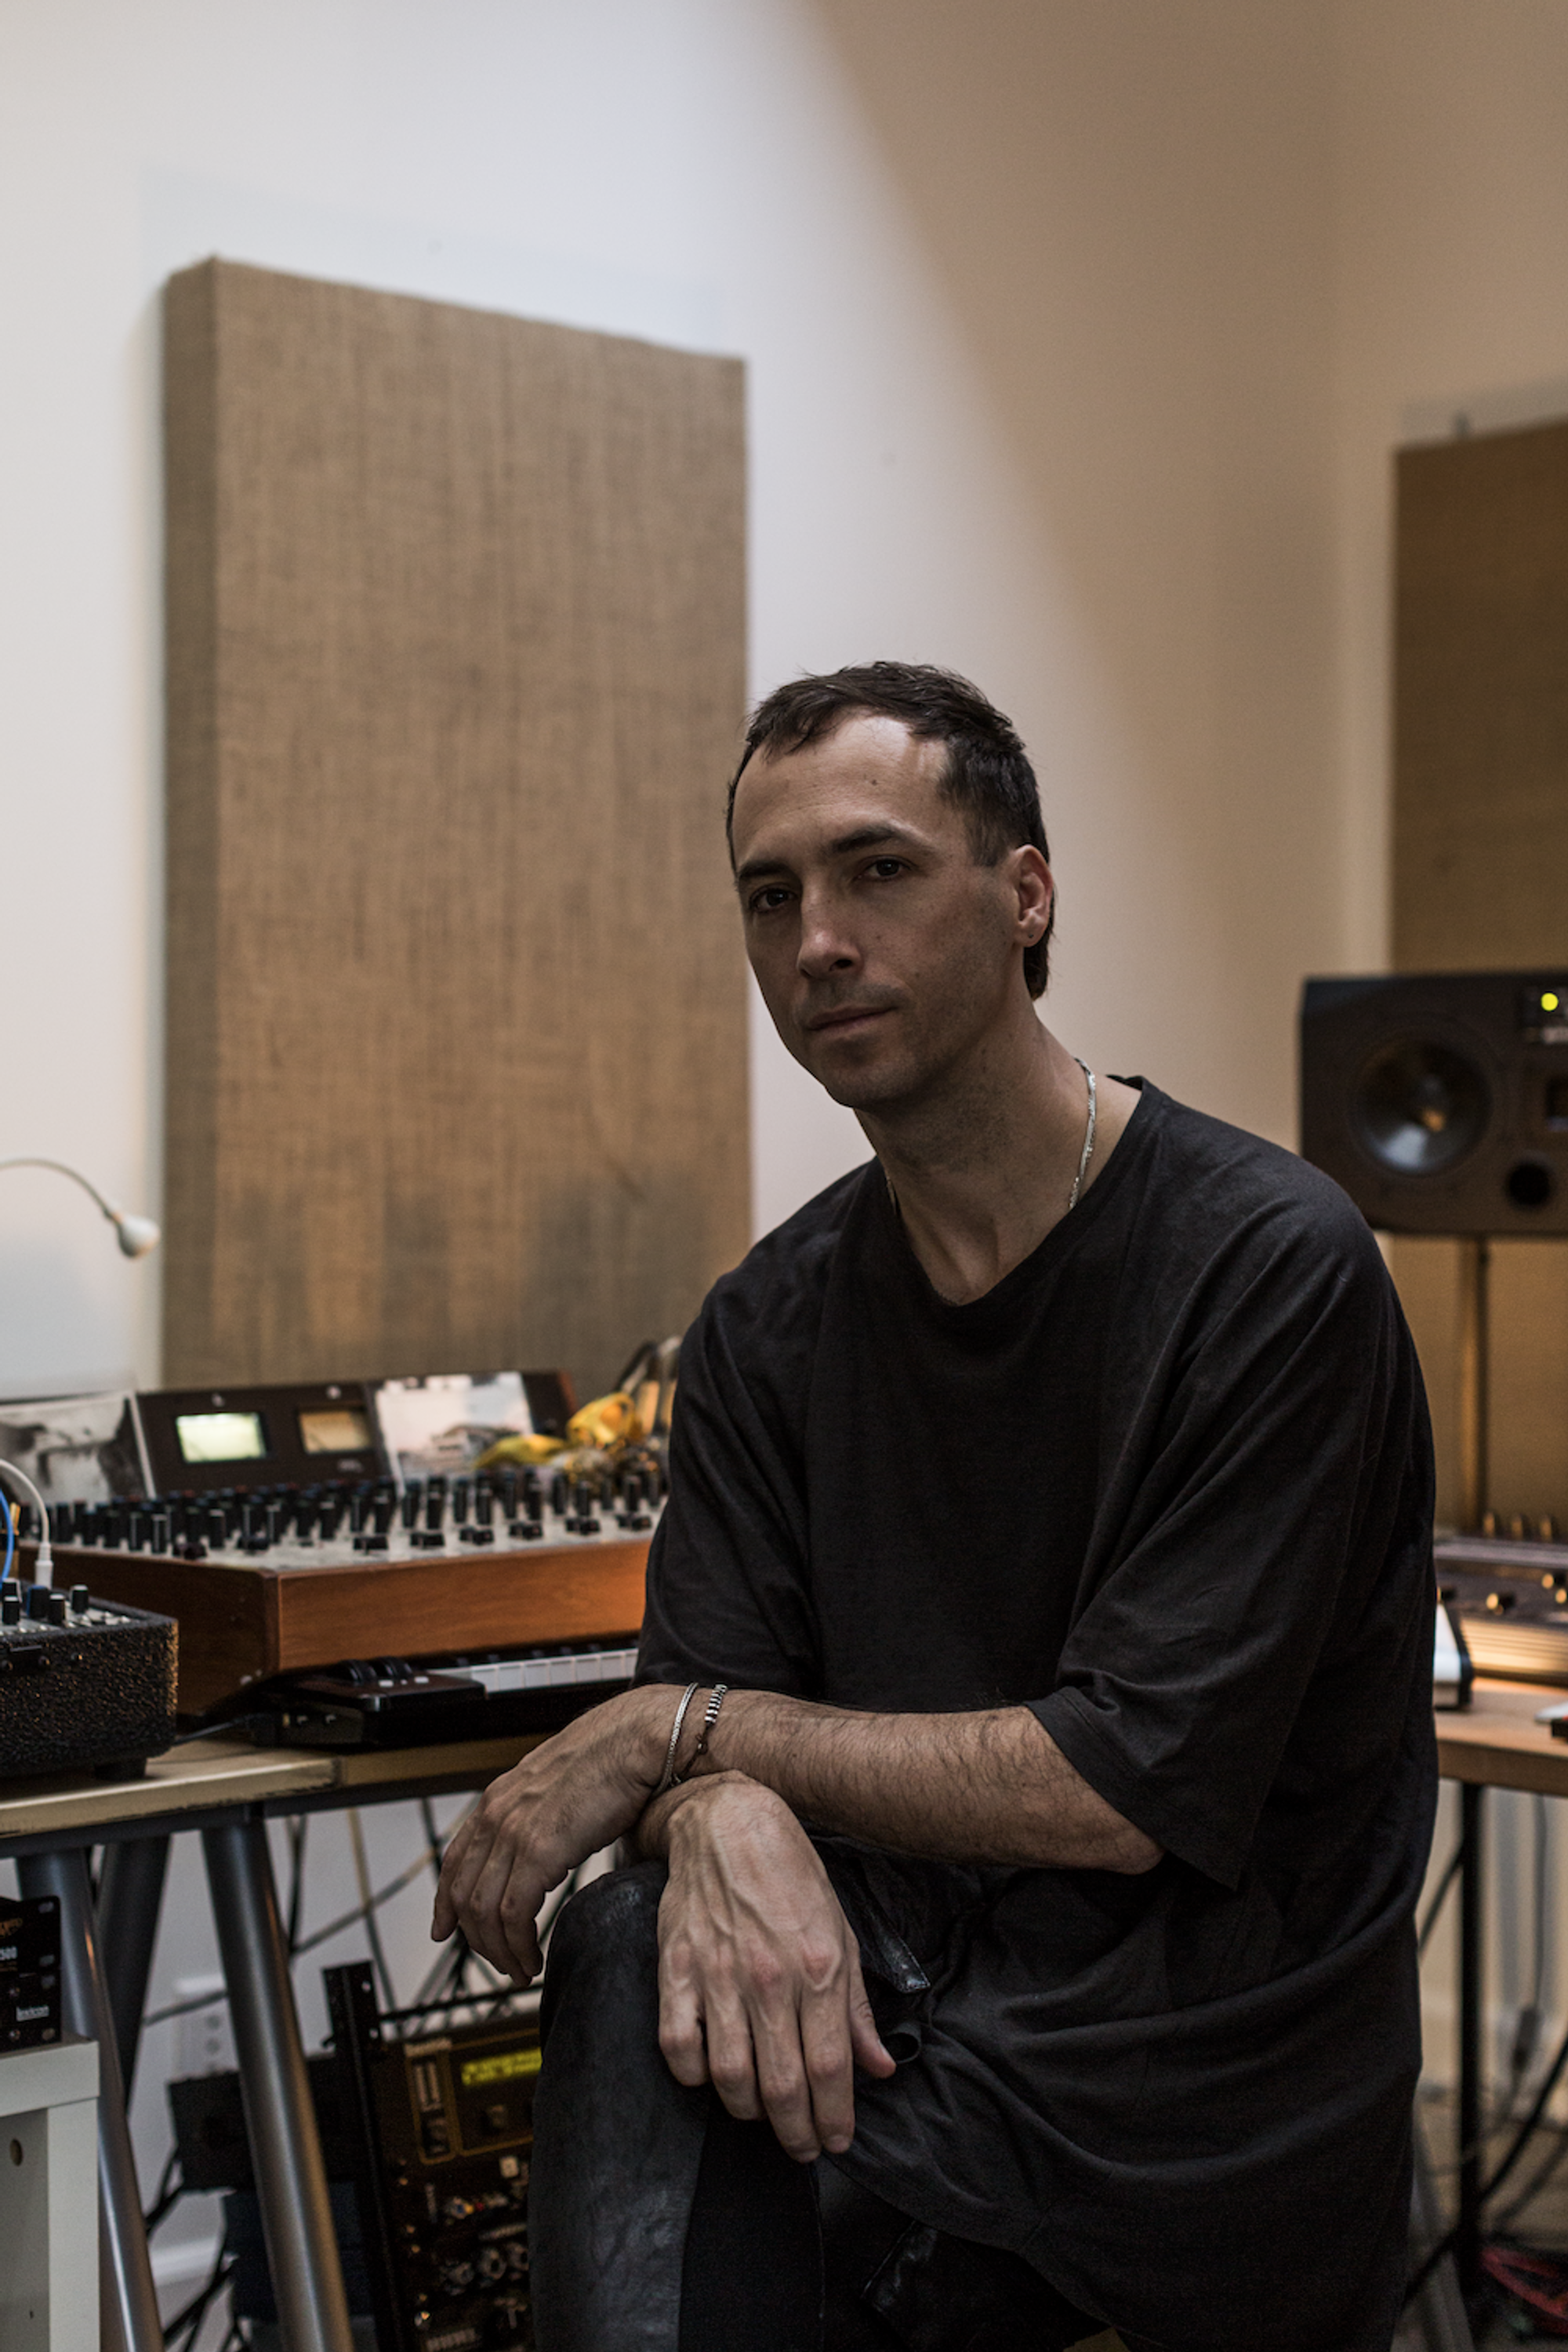 Tim Hecker in a music studio wearing a black shirt